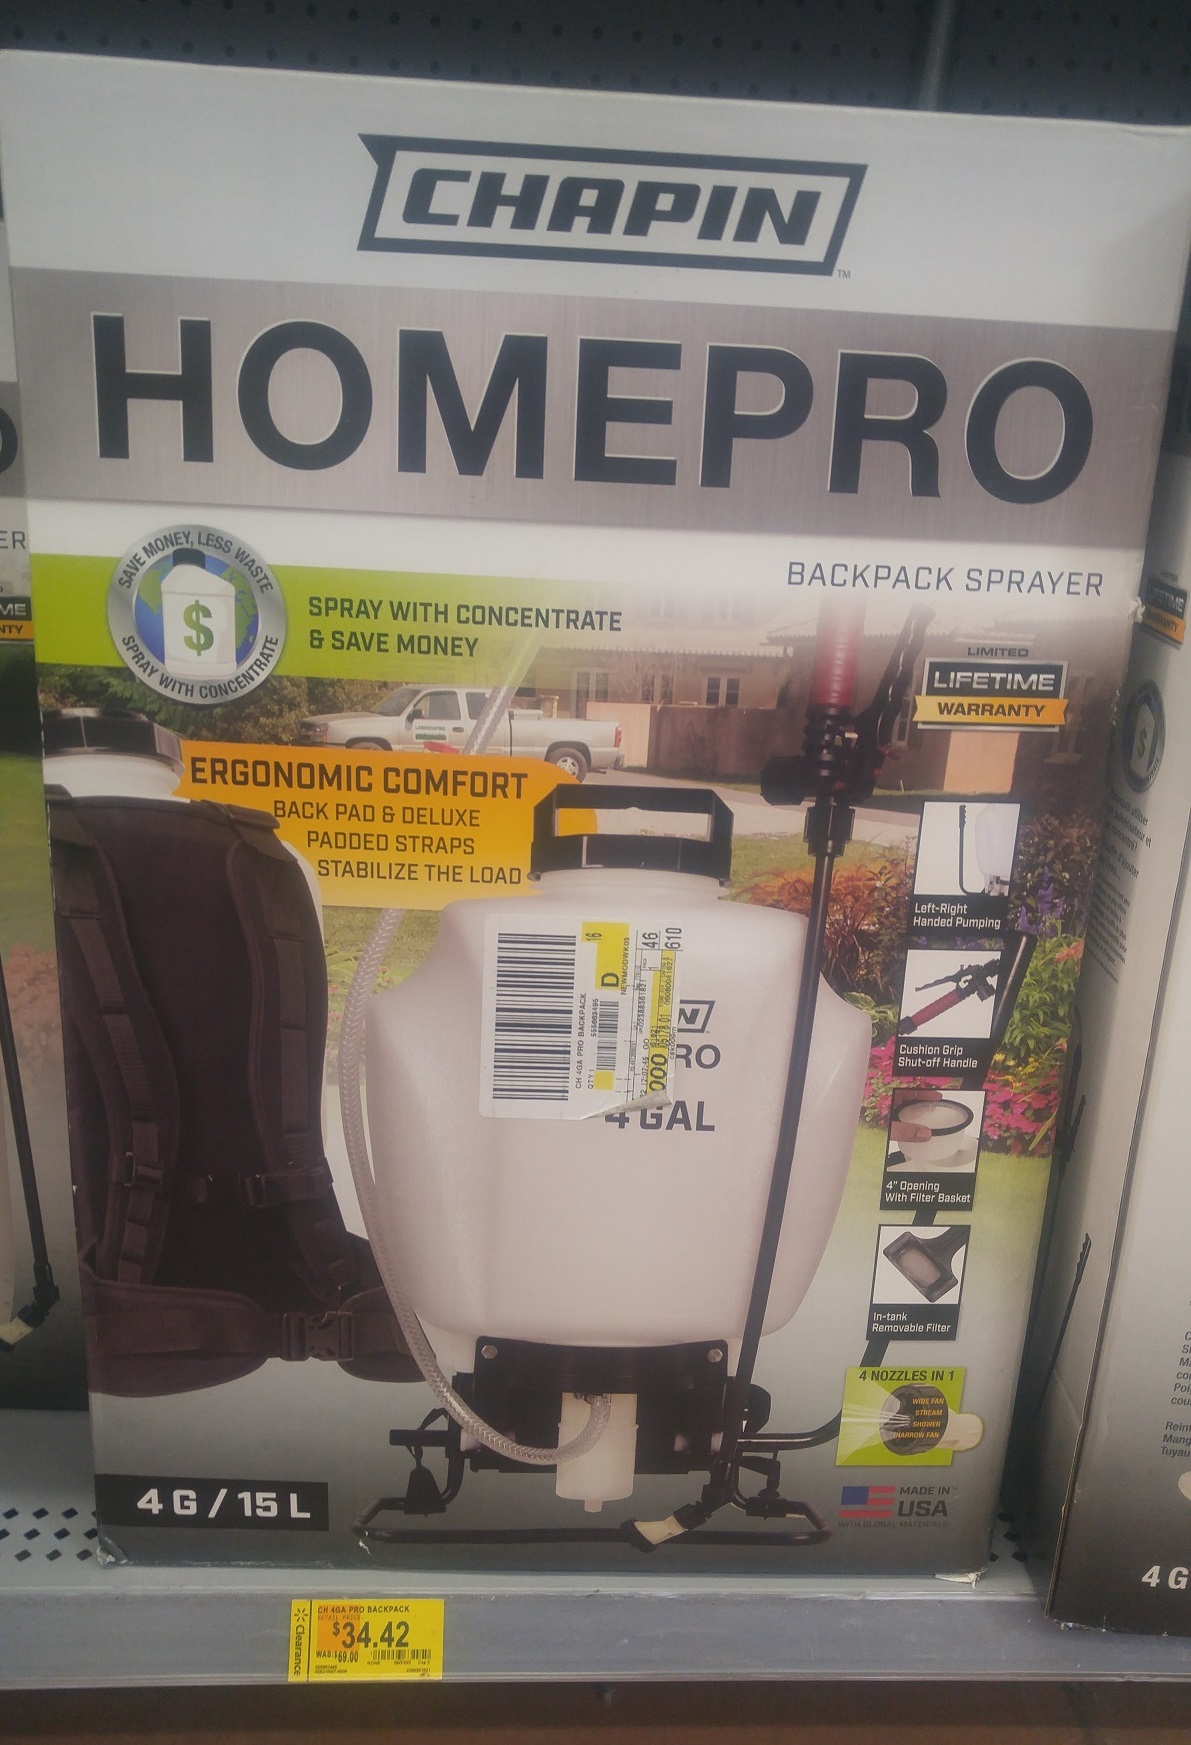 Chapin Homepro Home & Garden Sprayer - 4 gal Backpack Sprayer - $34.42 (was $69) at Walmart (YMMV)